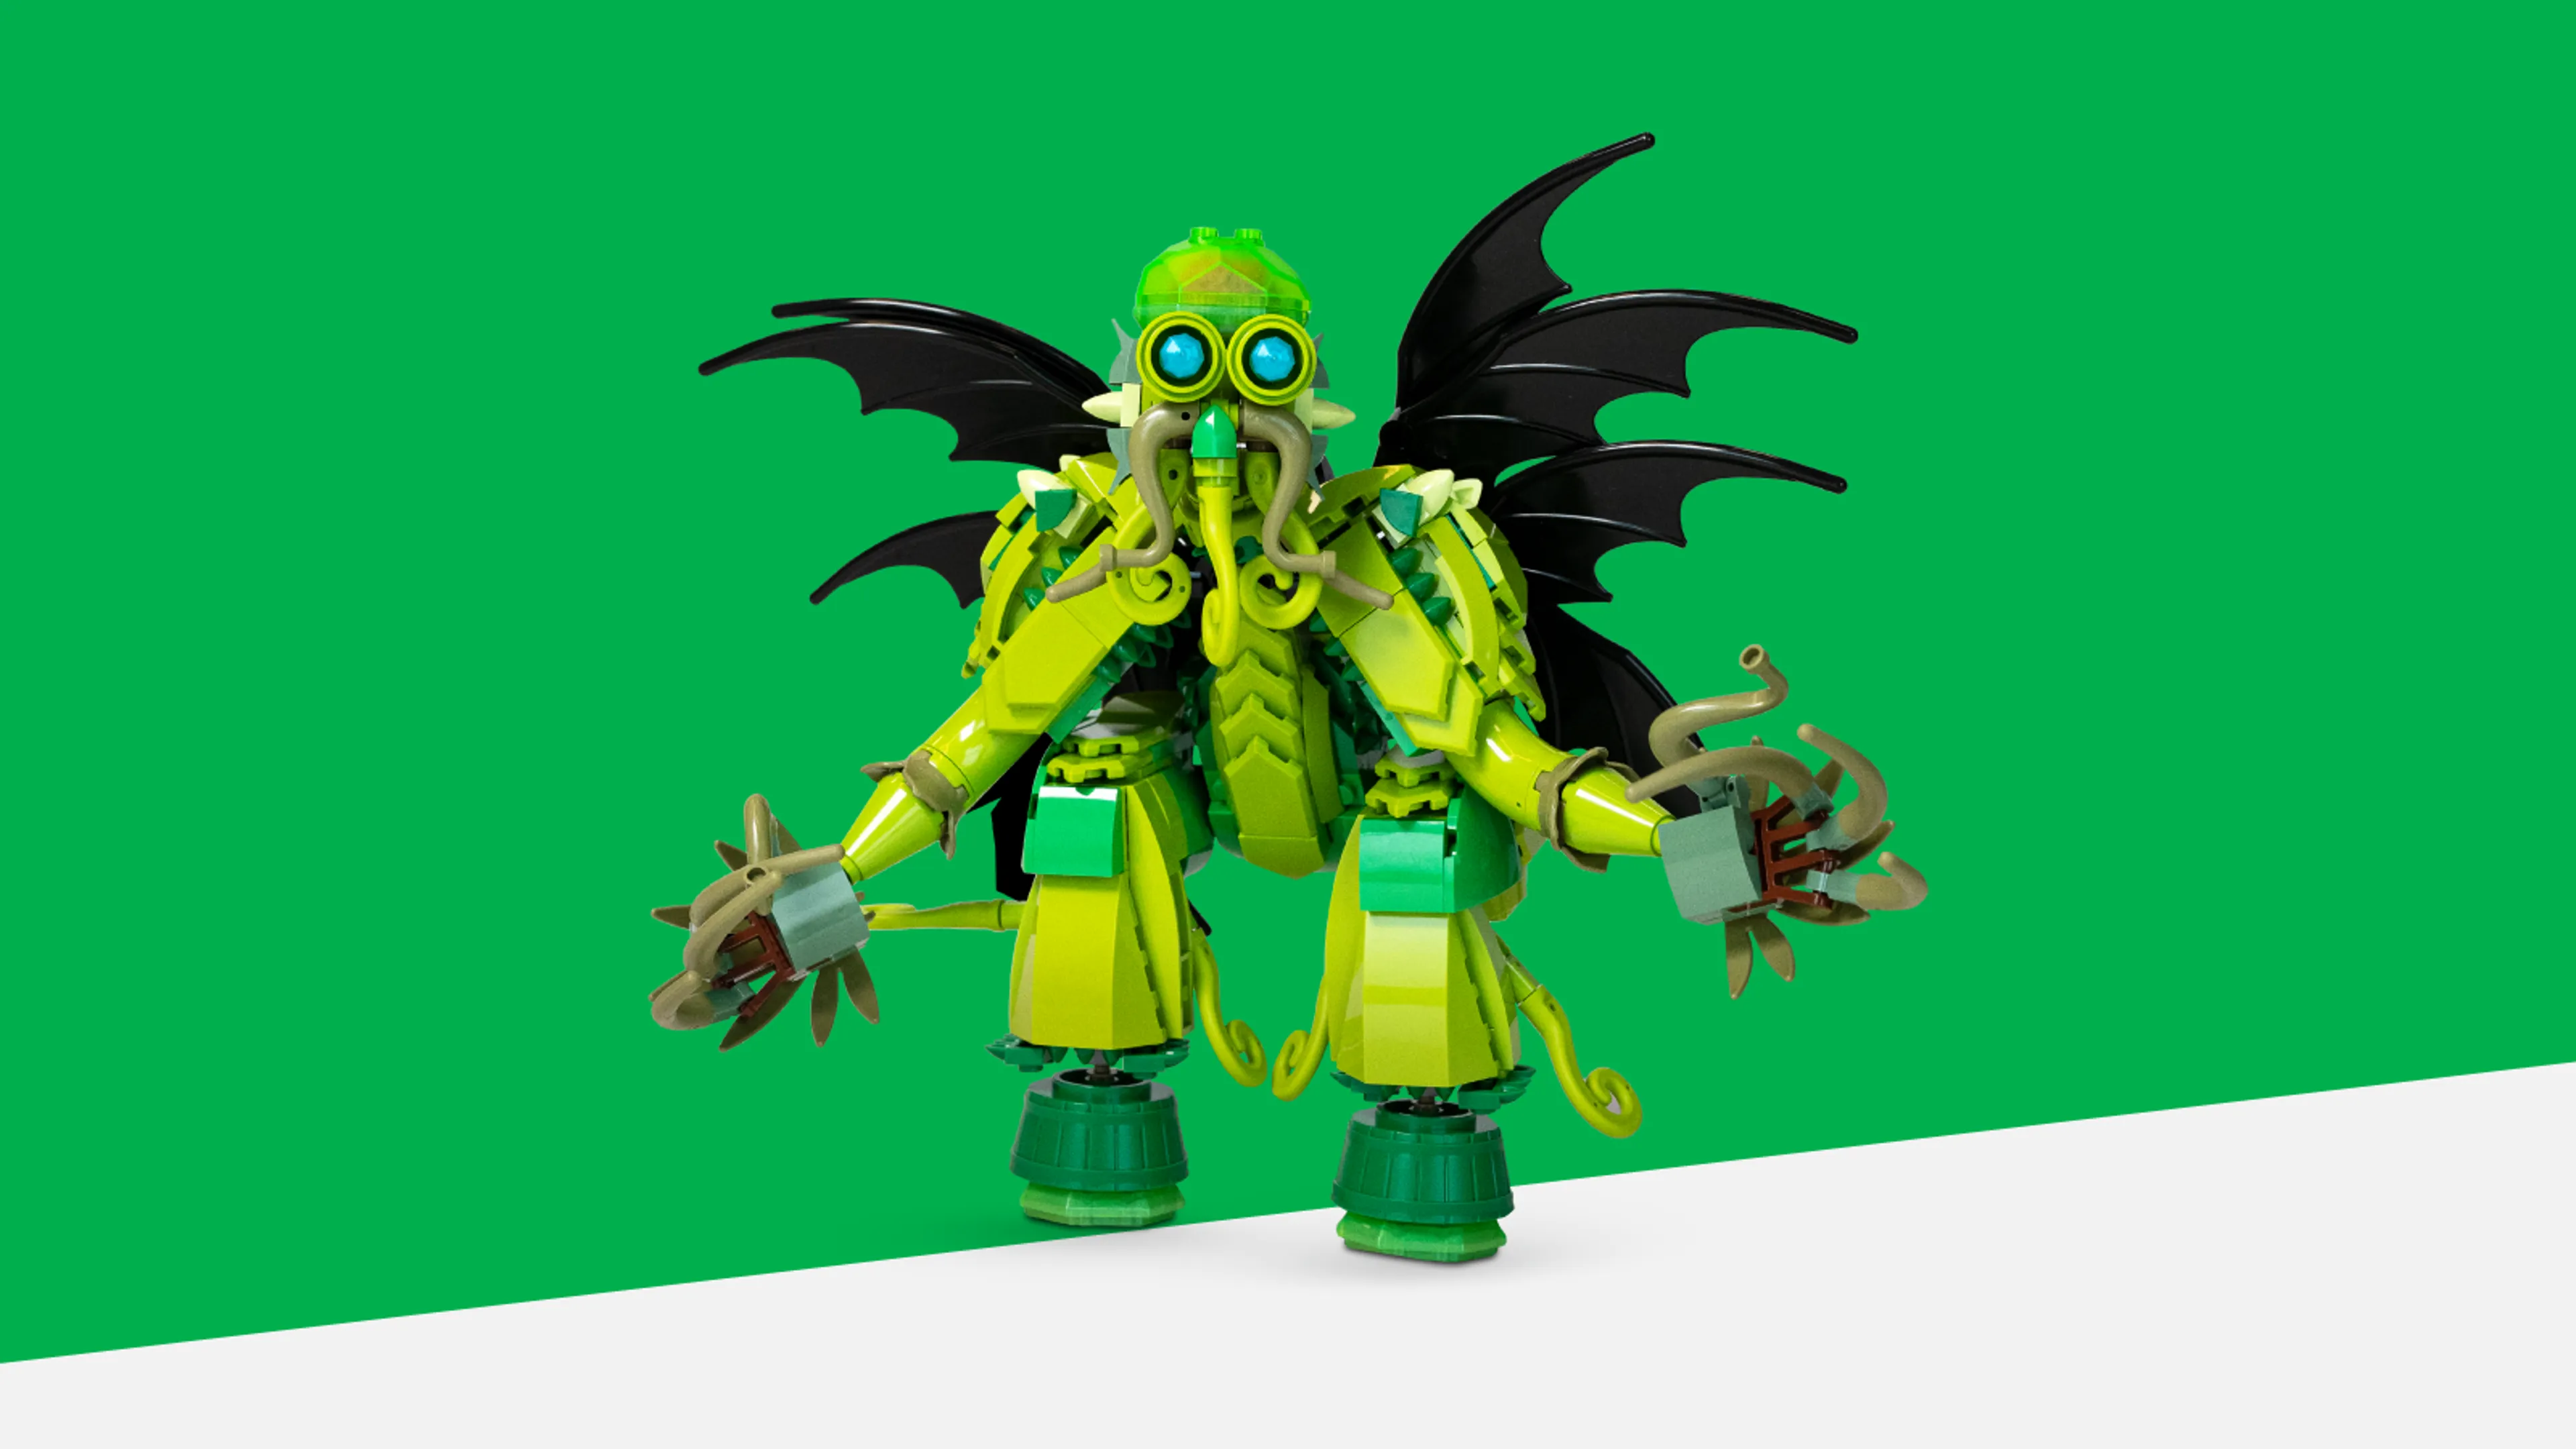 A green LEGO monster